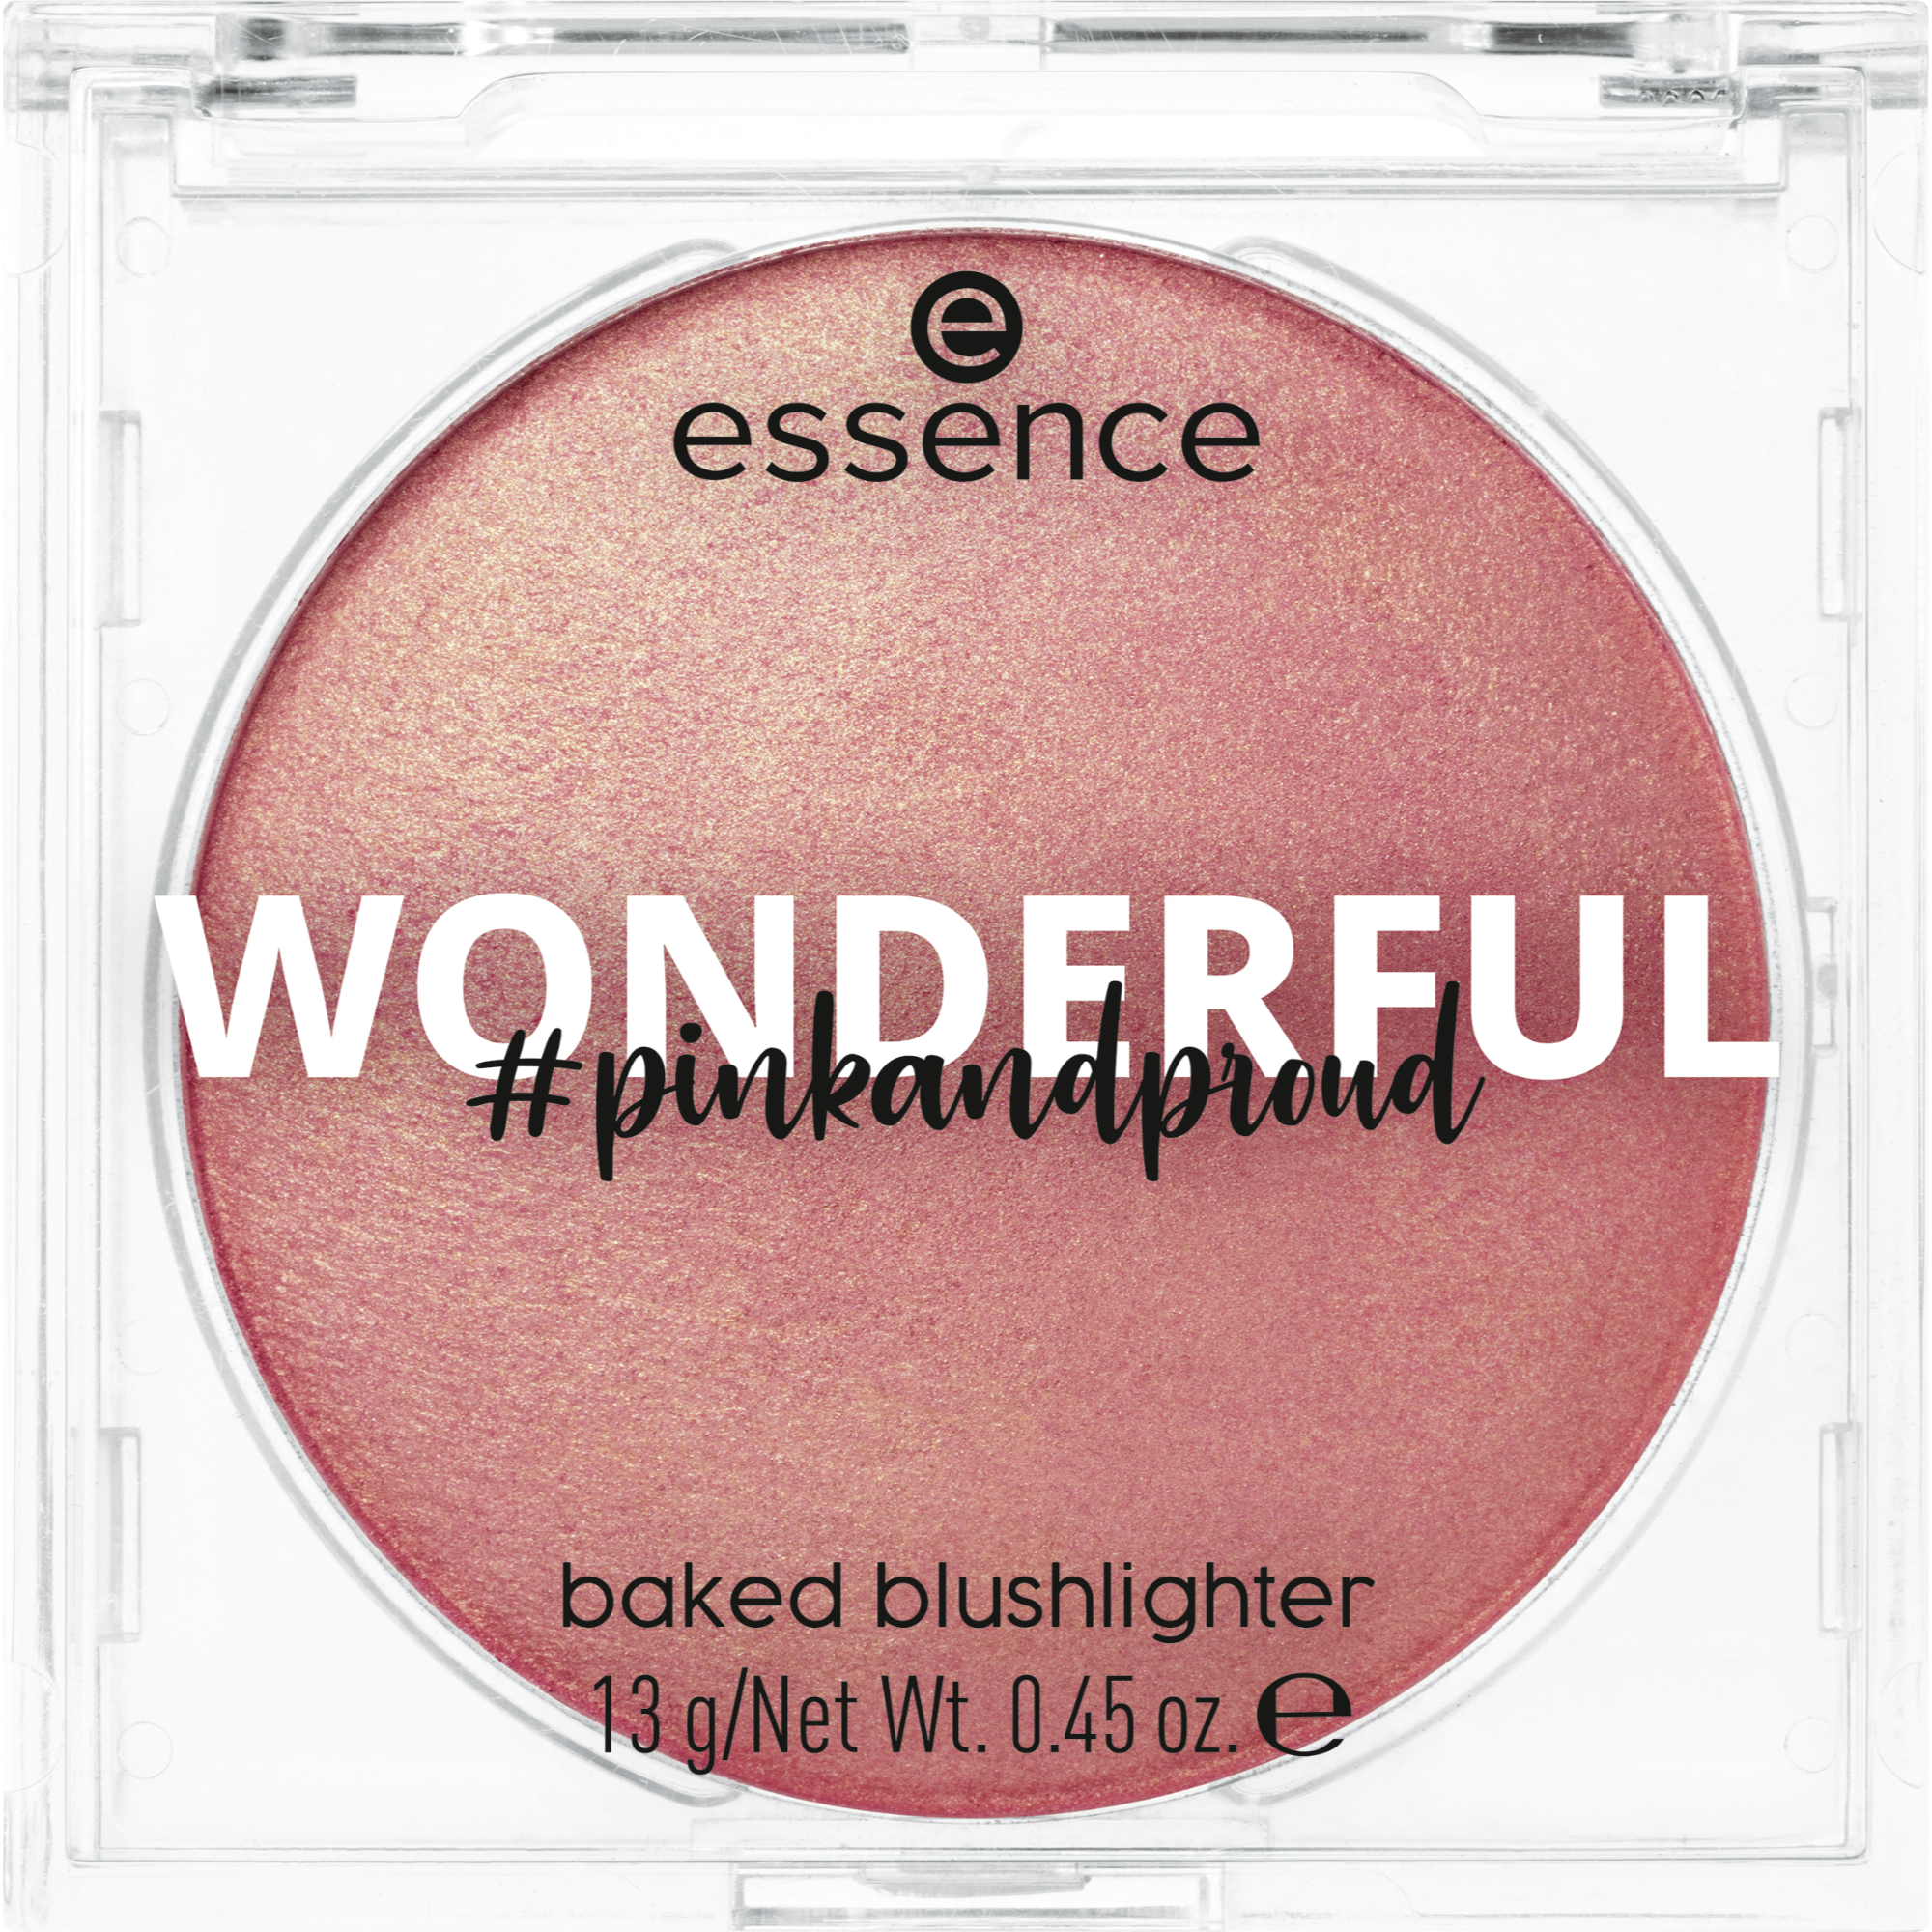 pinkandproud WONDERFUL baked blushlighter